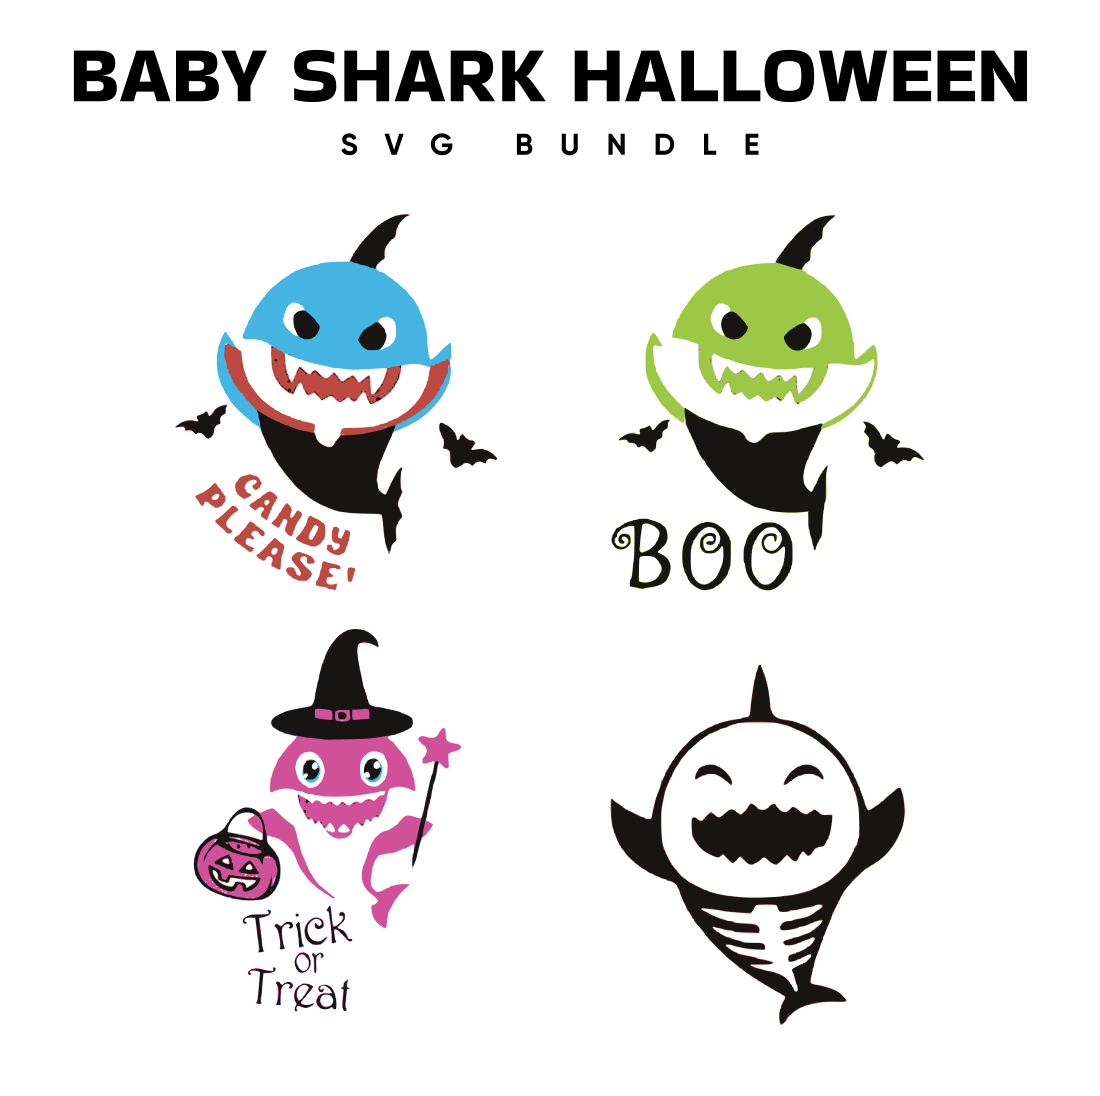 Baby Shark Halloween SVG.